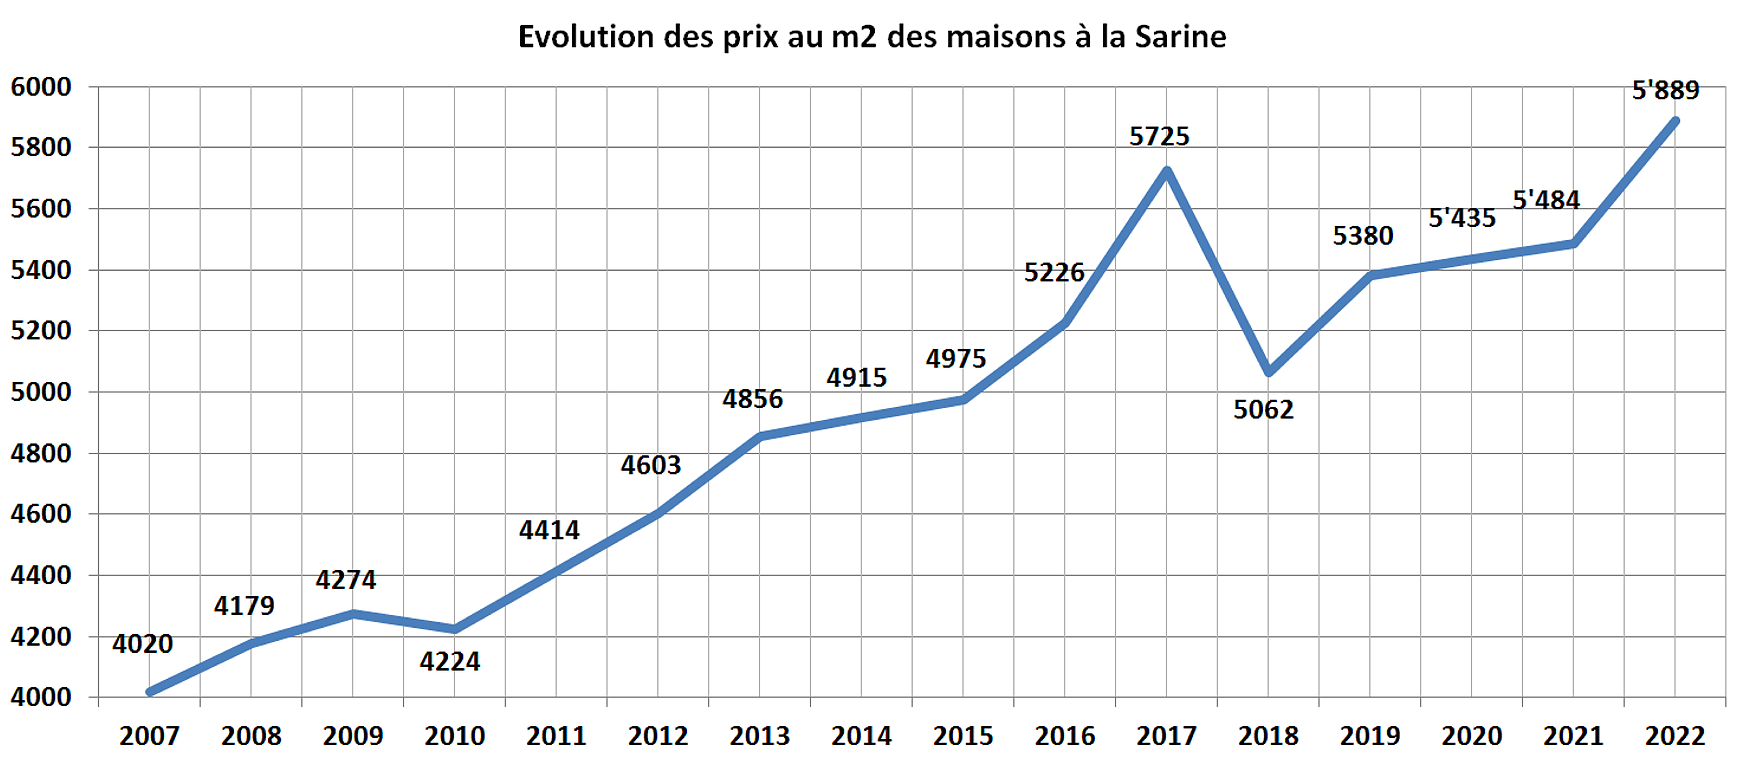 evolution prix m2 maison la sarine 2022